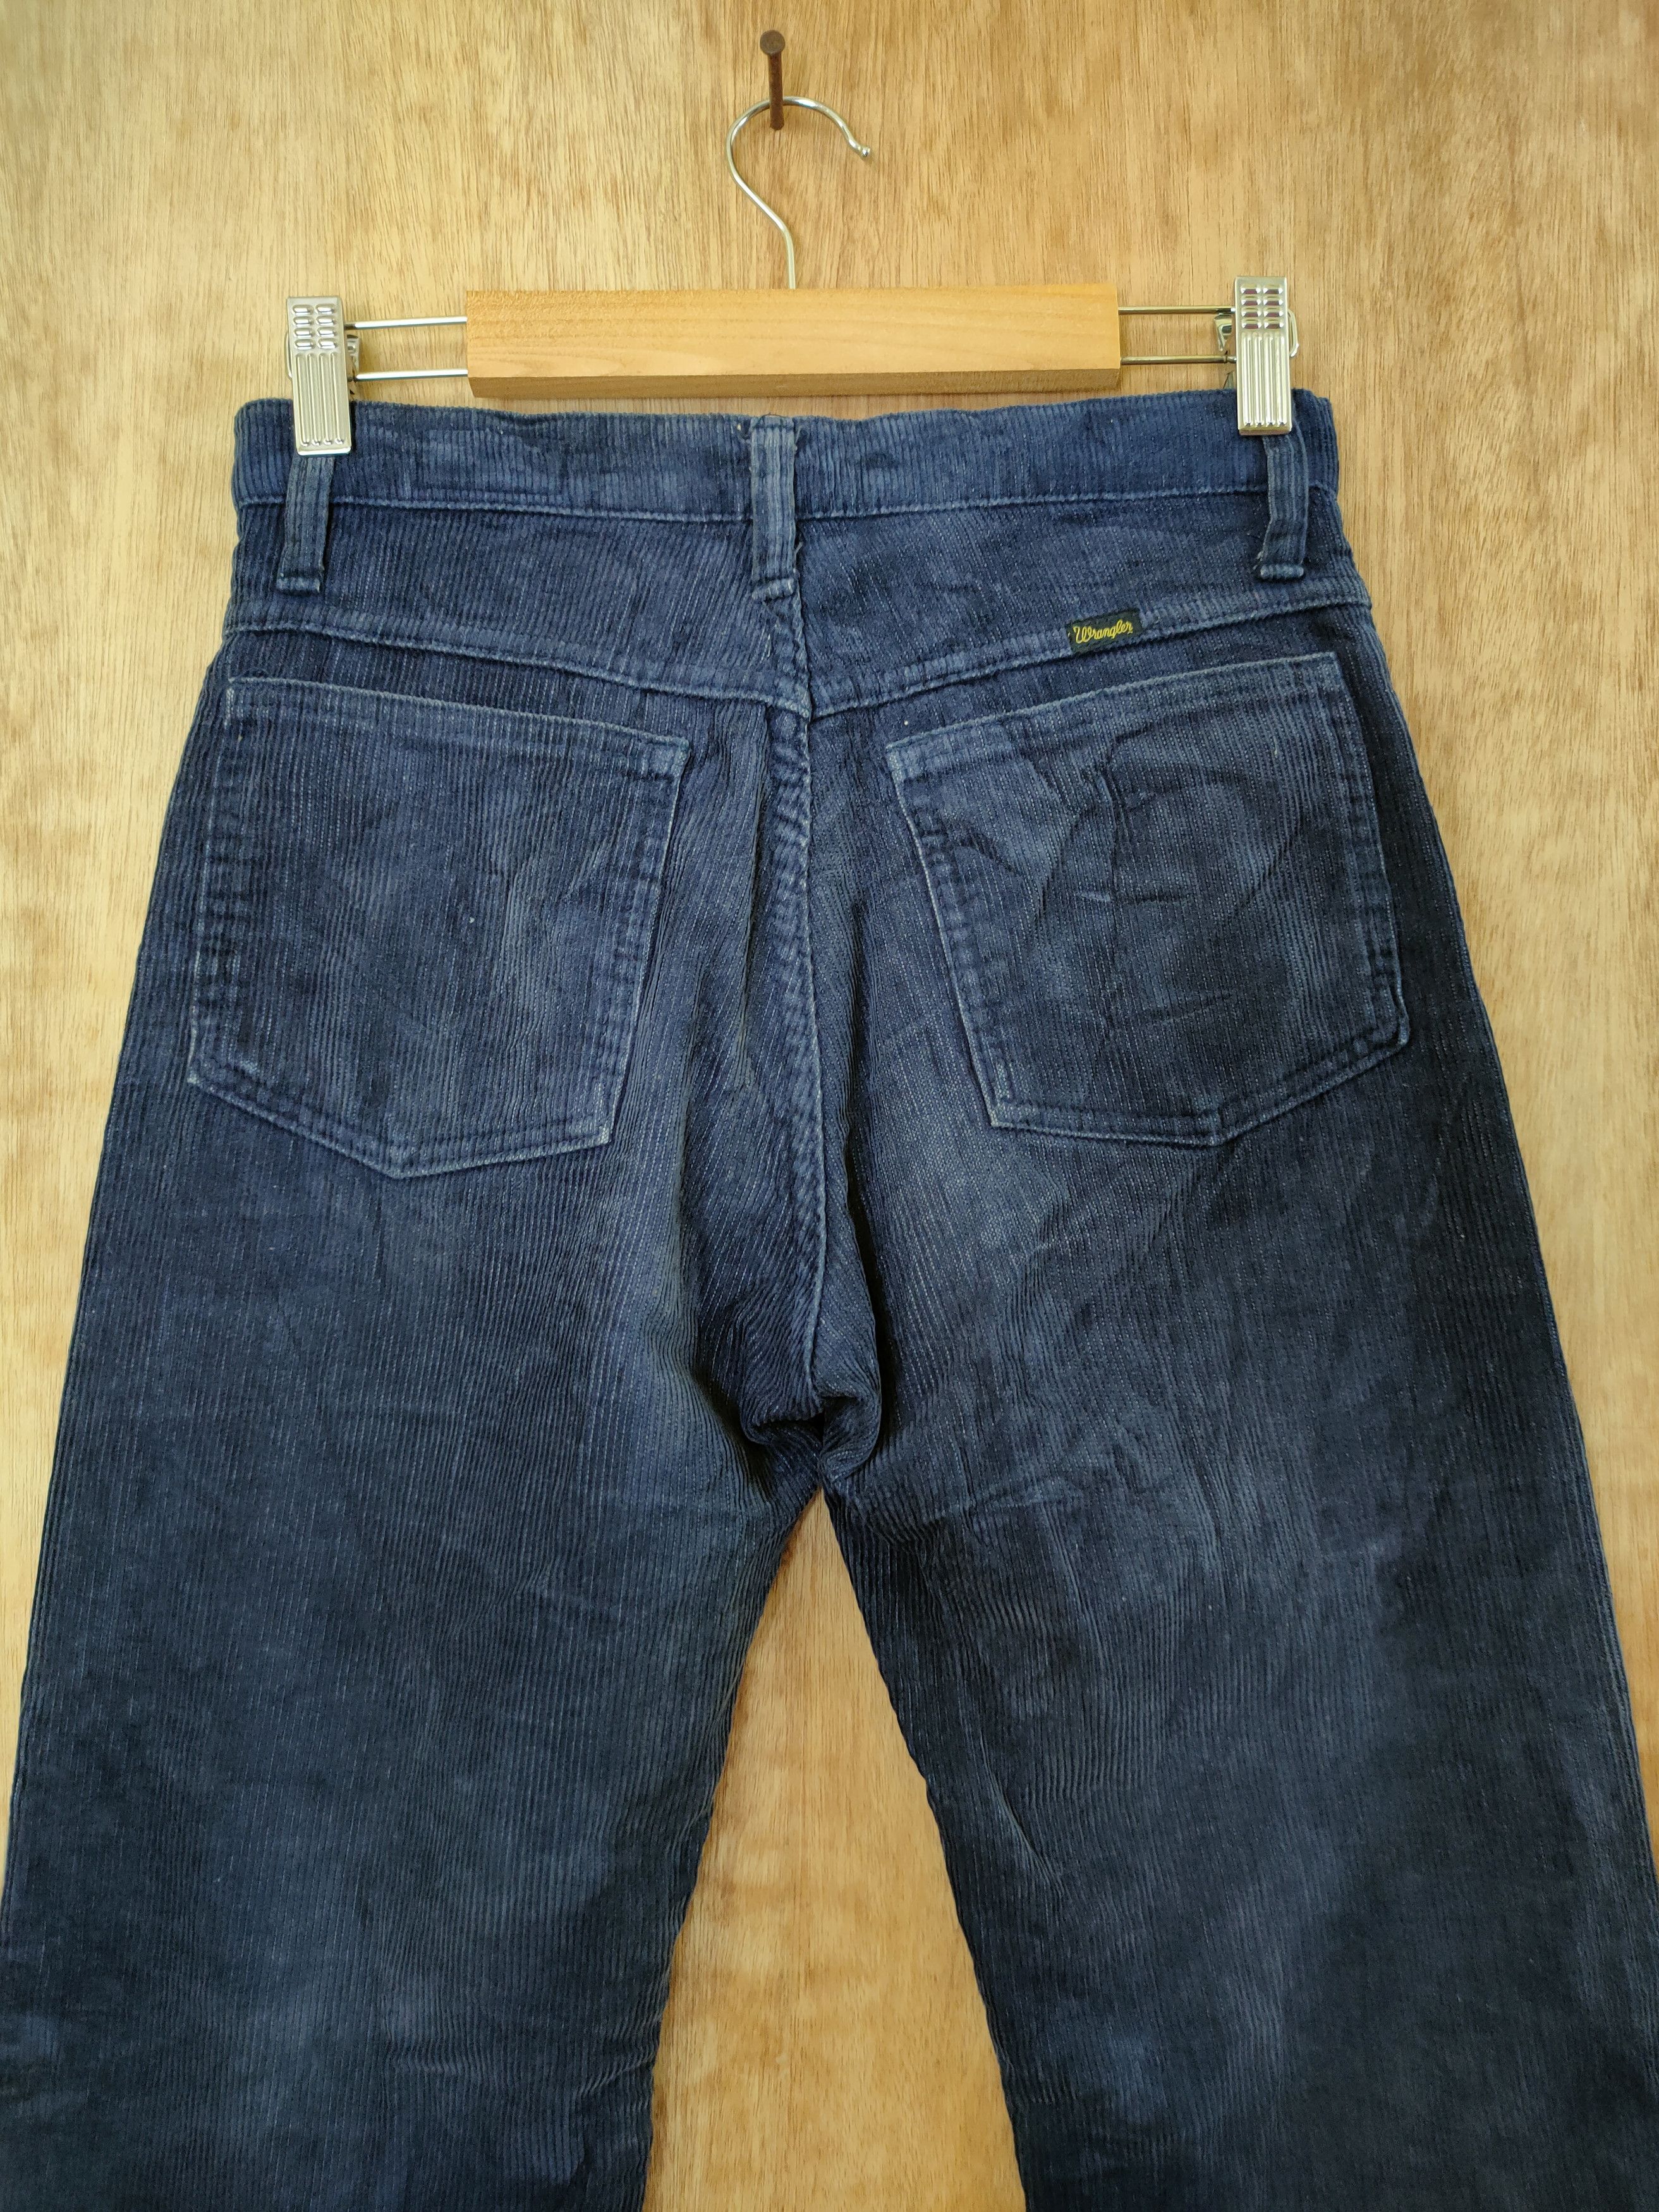 Vintage 90s wrangler vintage corduroy streetwear pants #46-413 Size US 28 / EU 44 - 8 Thumbnail